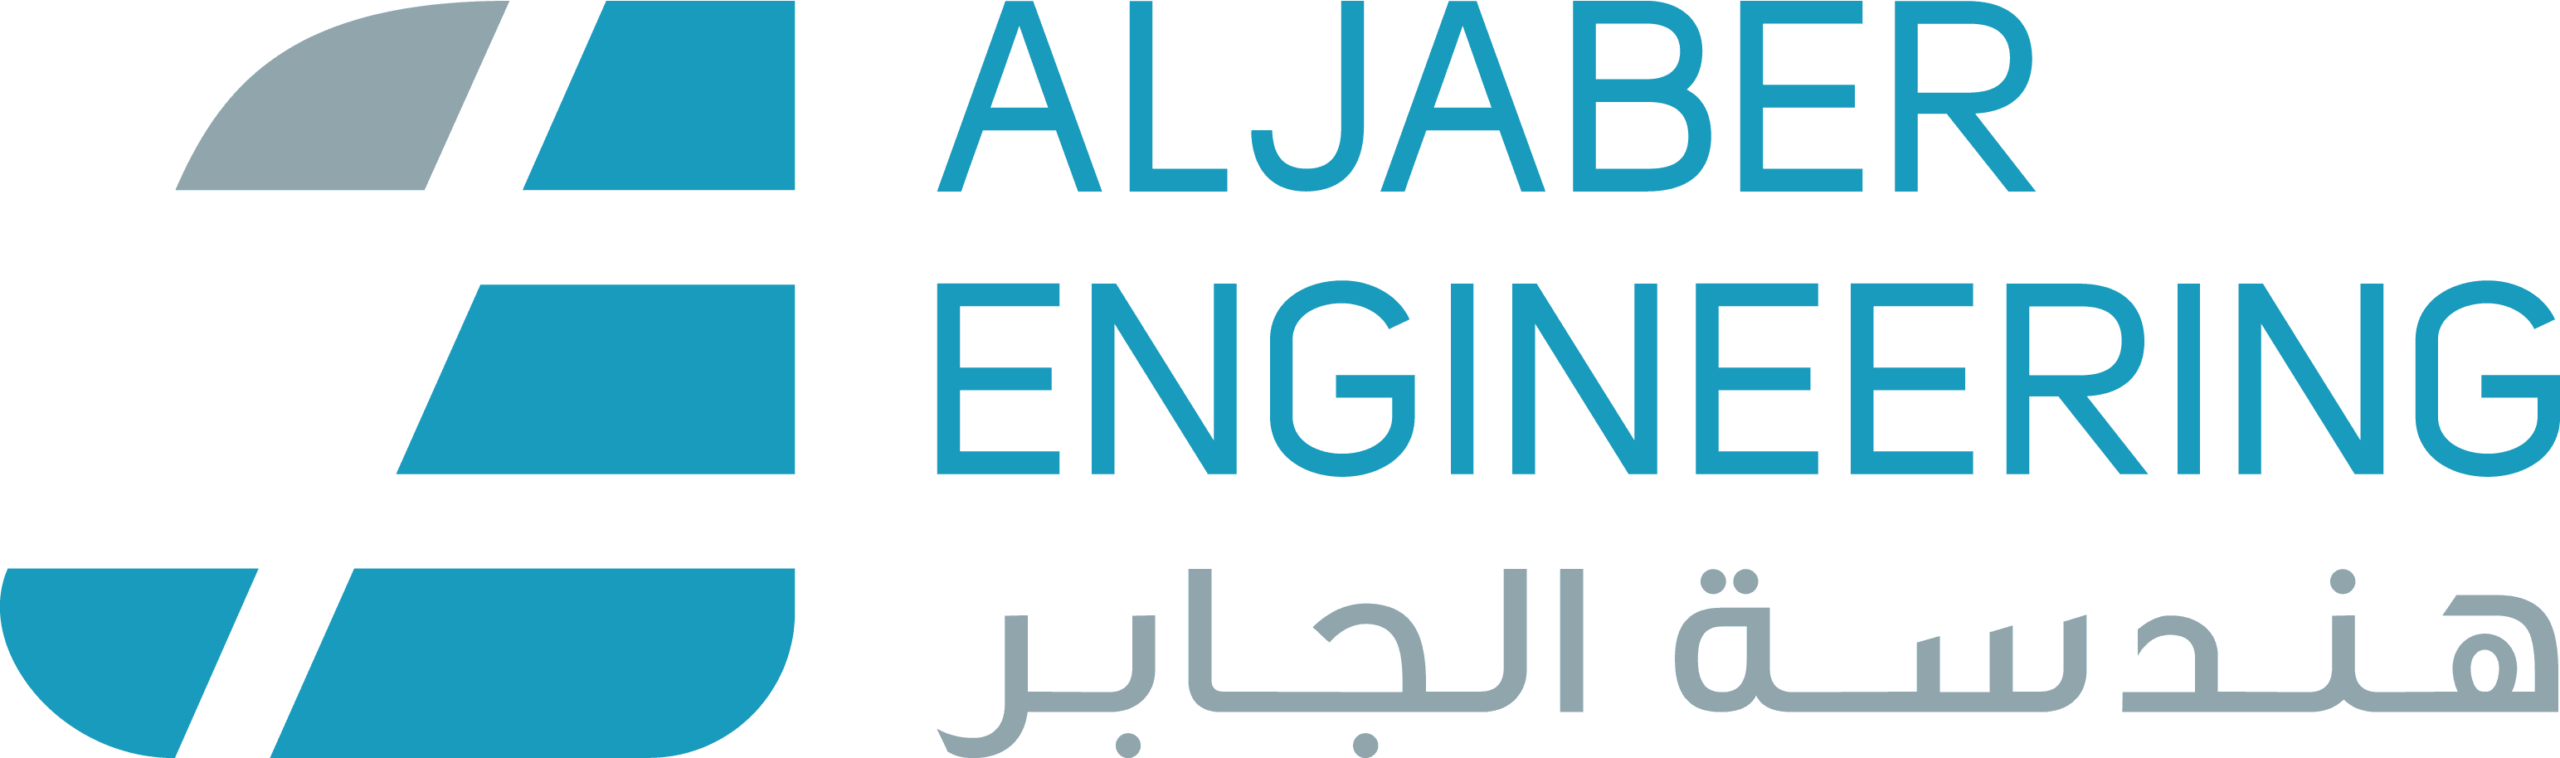 Al jaber logo